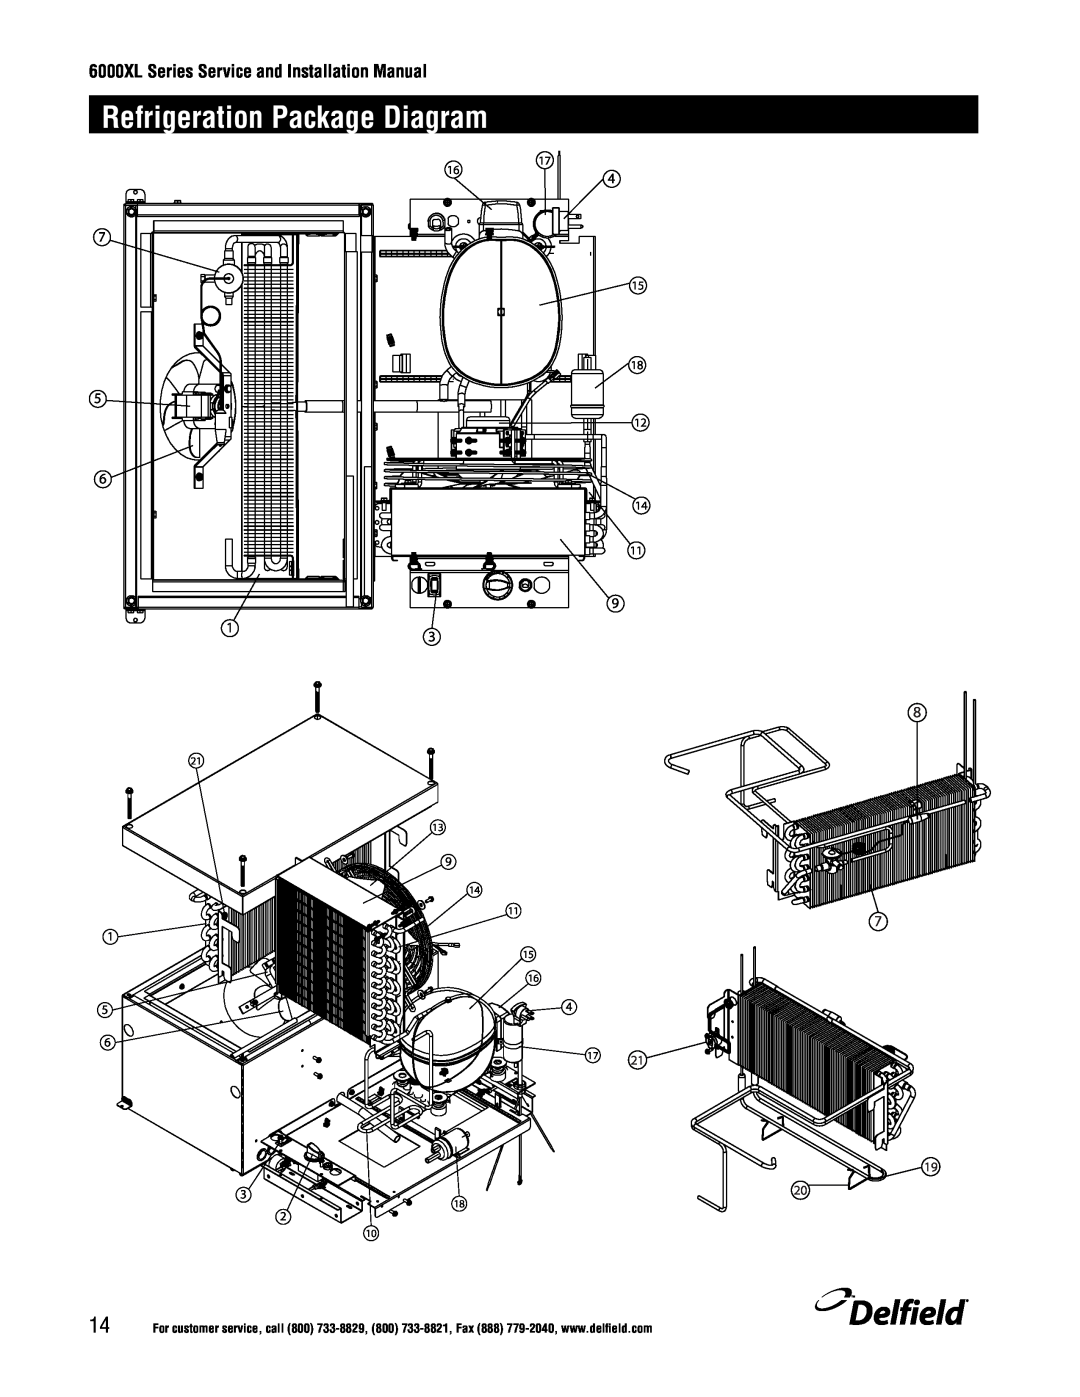 Delfield 6100XL manual Refrigeration Package Diagram, Delfield, 6000XL Series Service and Installation Manual,   